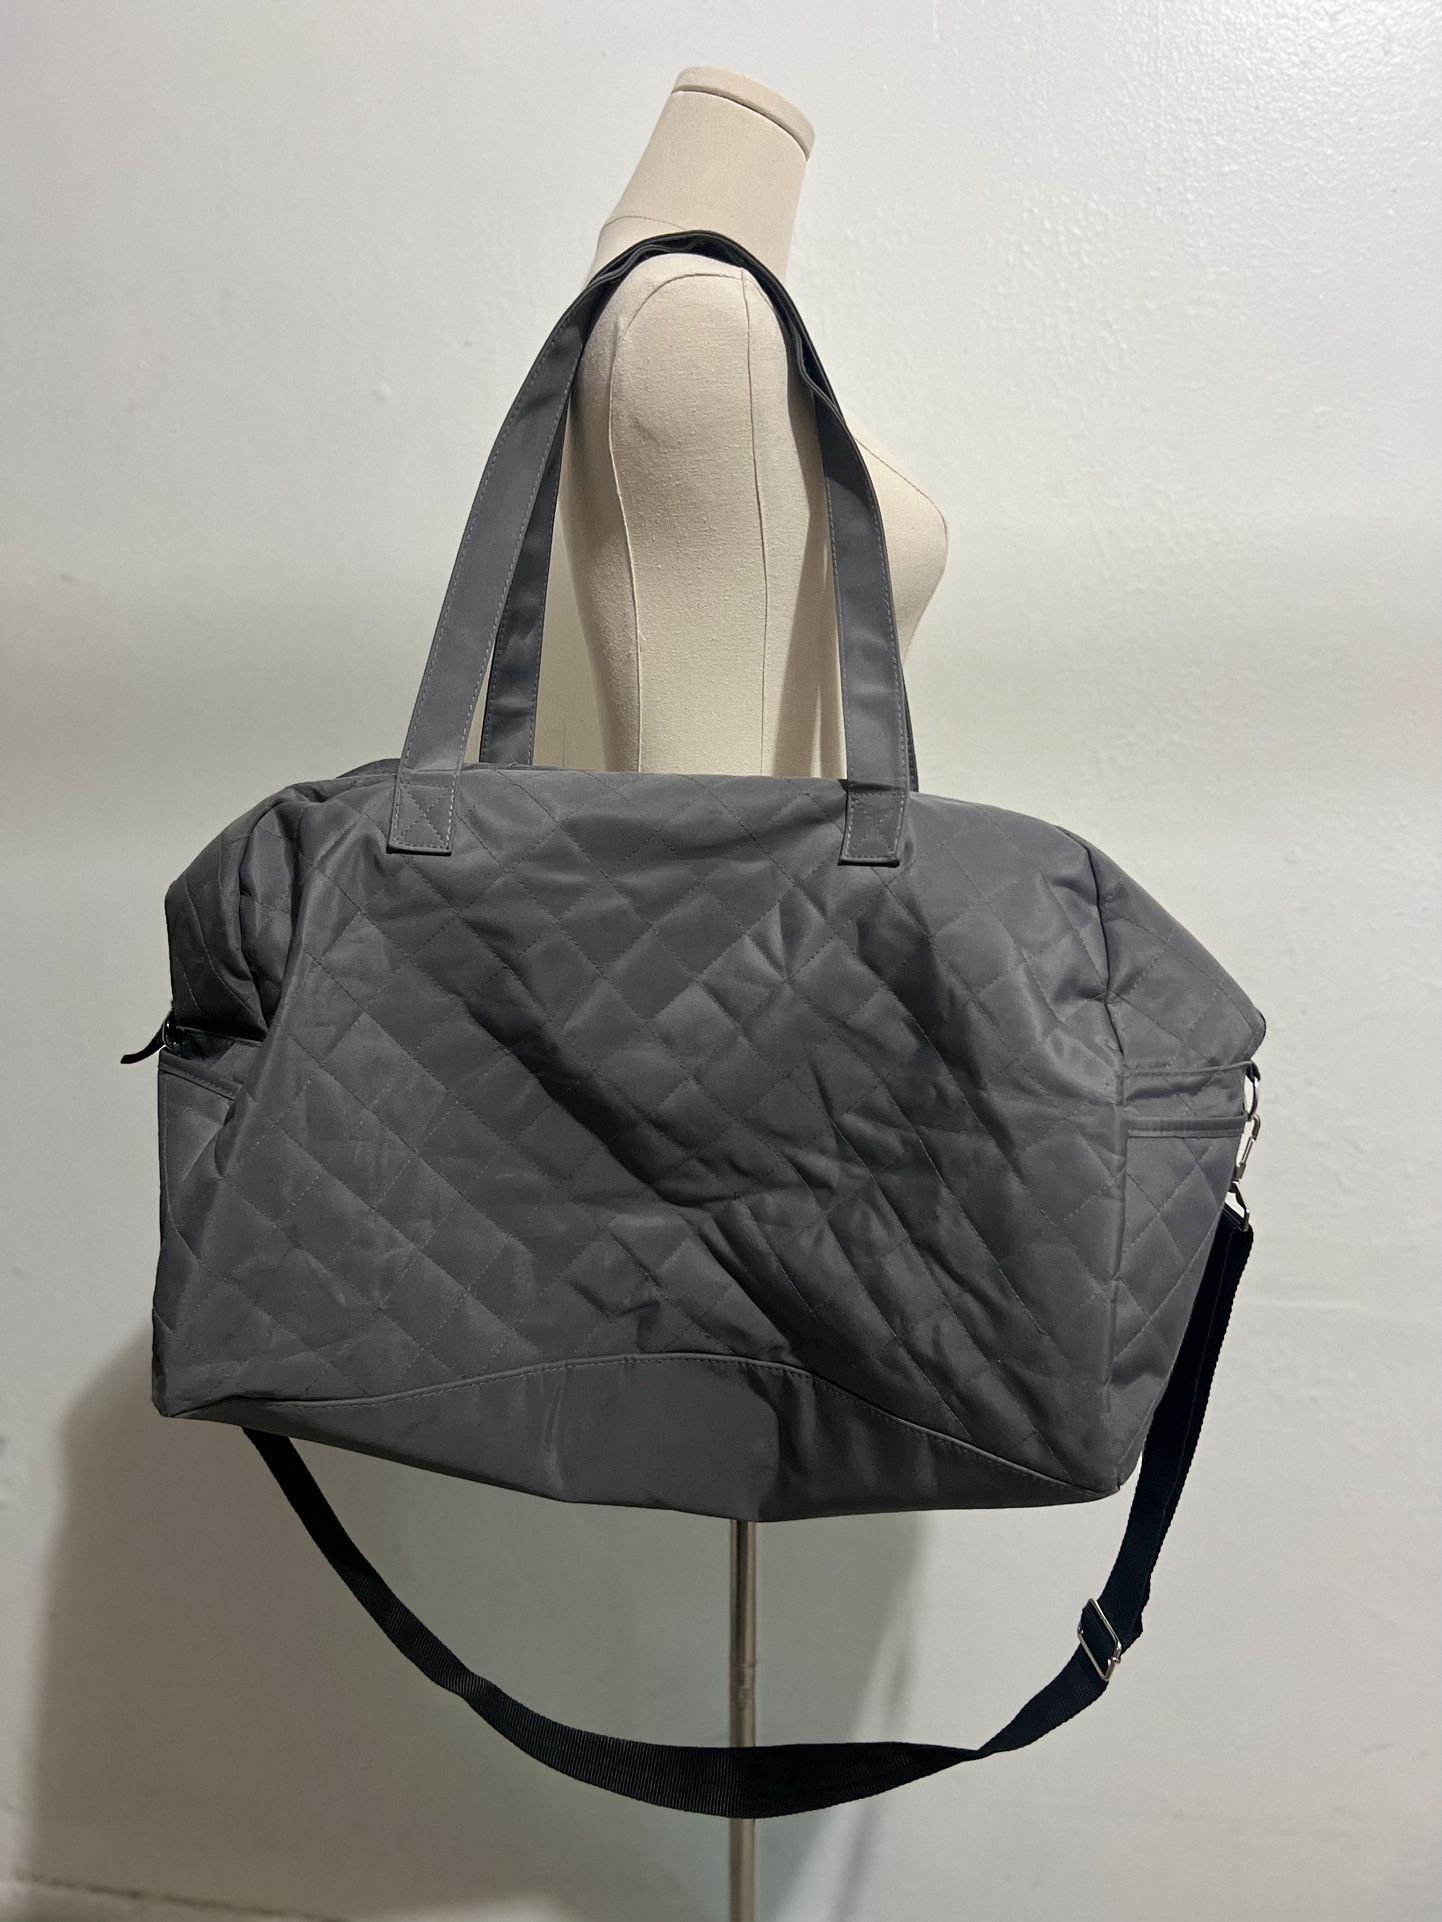 XLarge DSW Duffle Bag